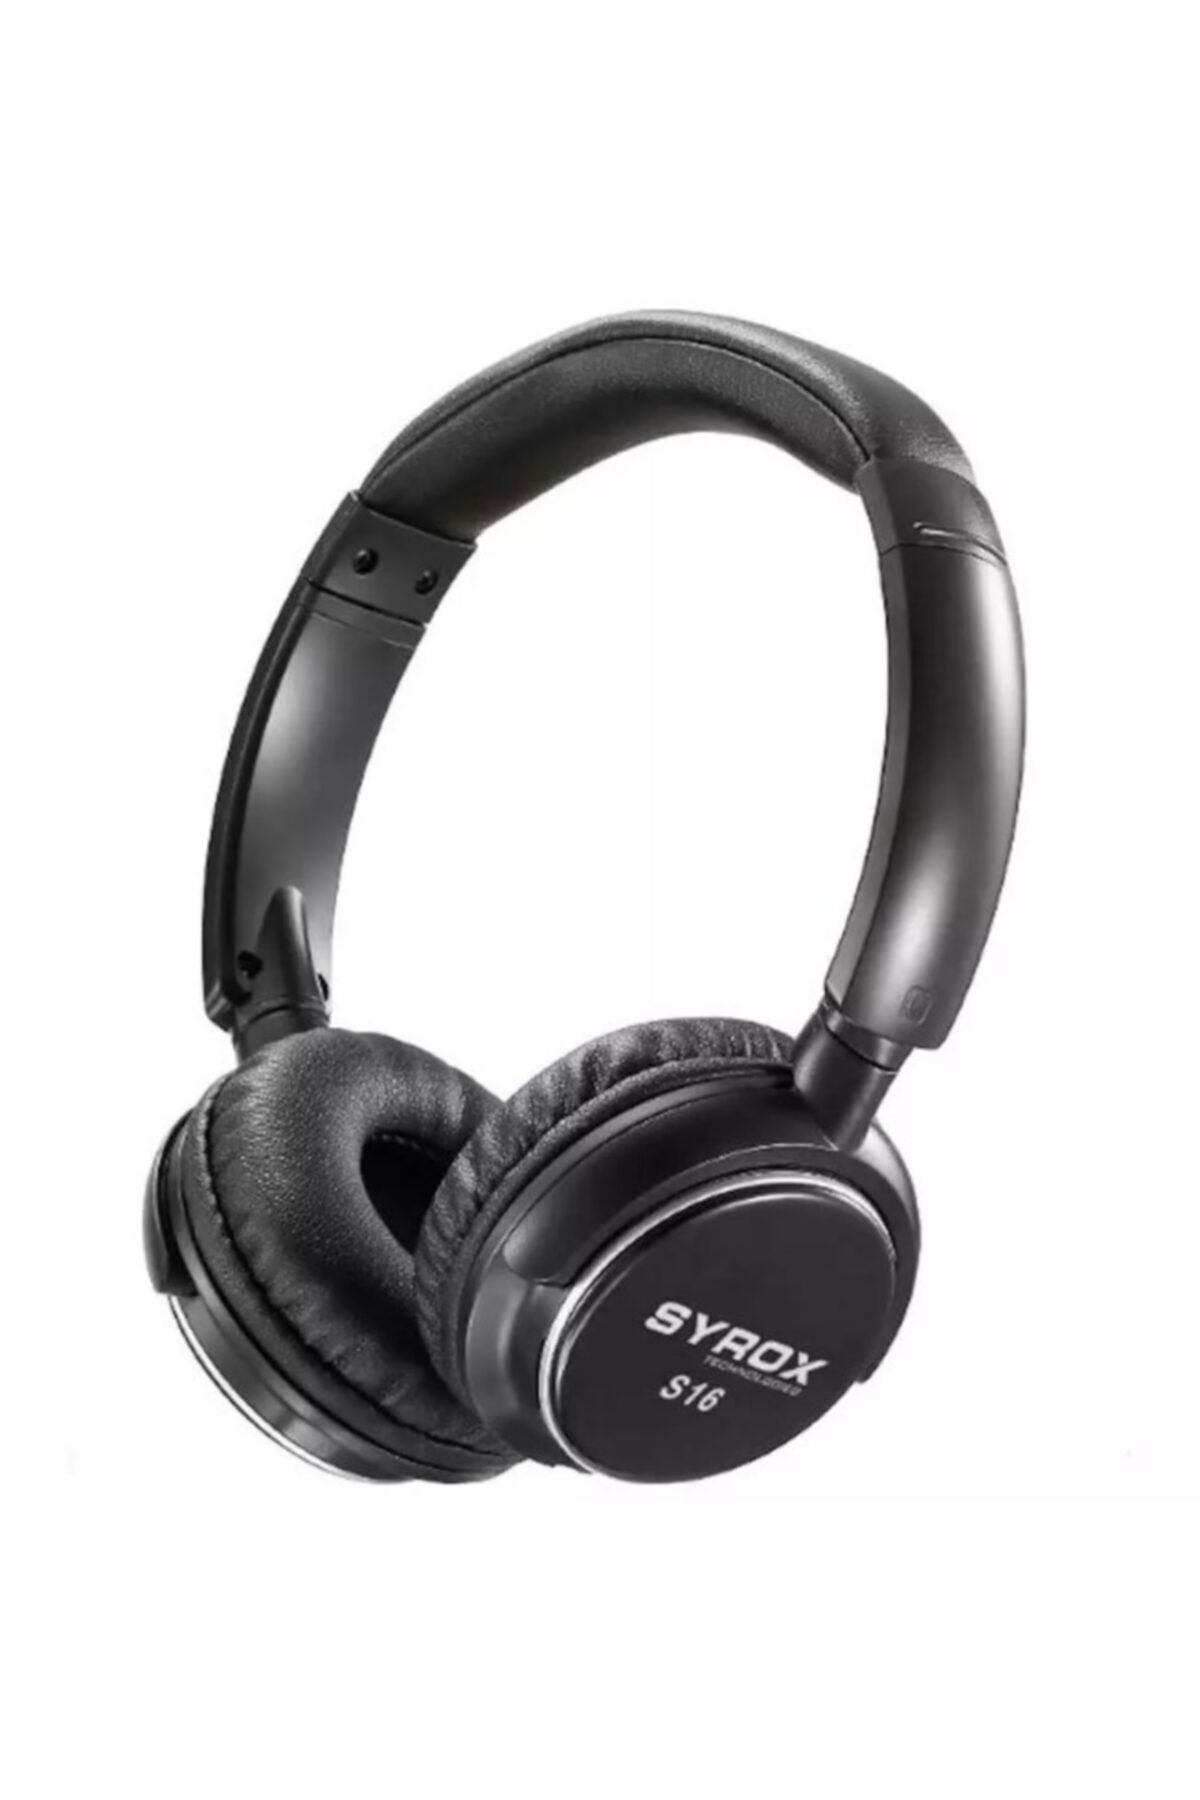 Syrox S16 Bluetooth Kulak Üstü Kablosuz Mikrofonlu Kulaklık - Mavi